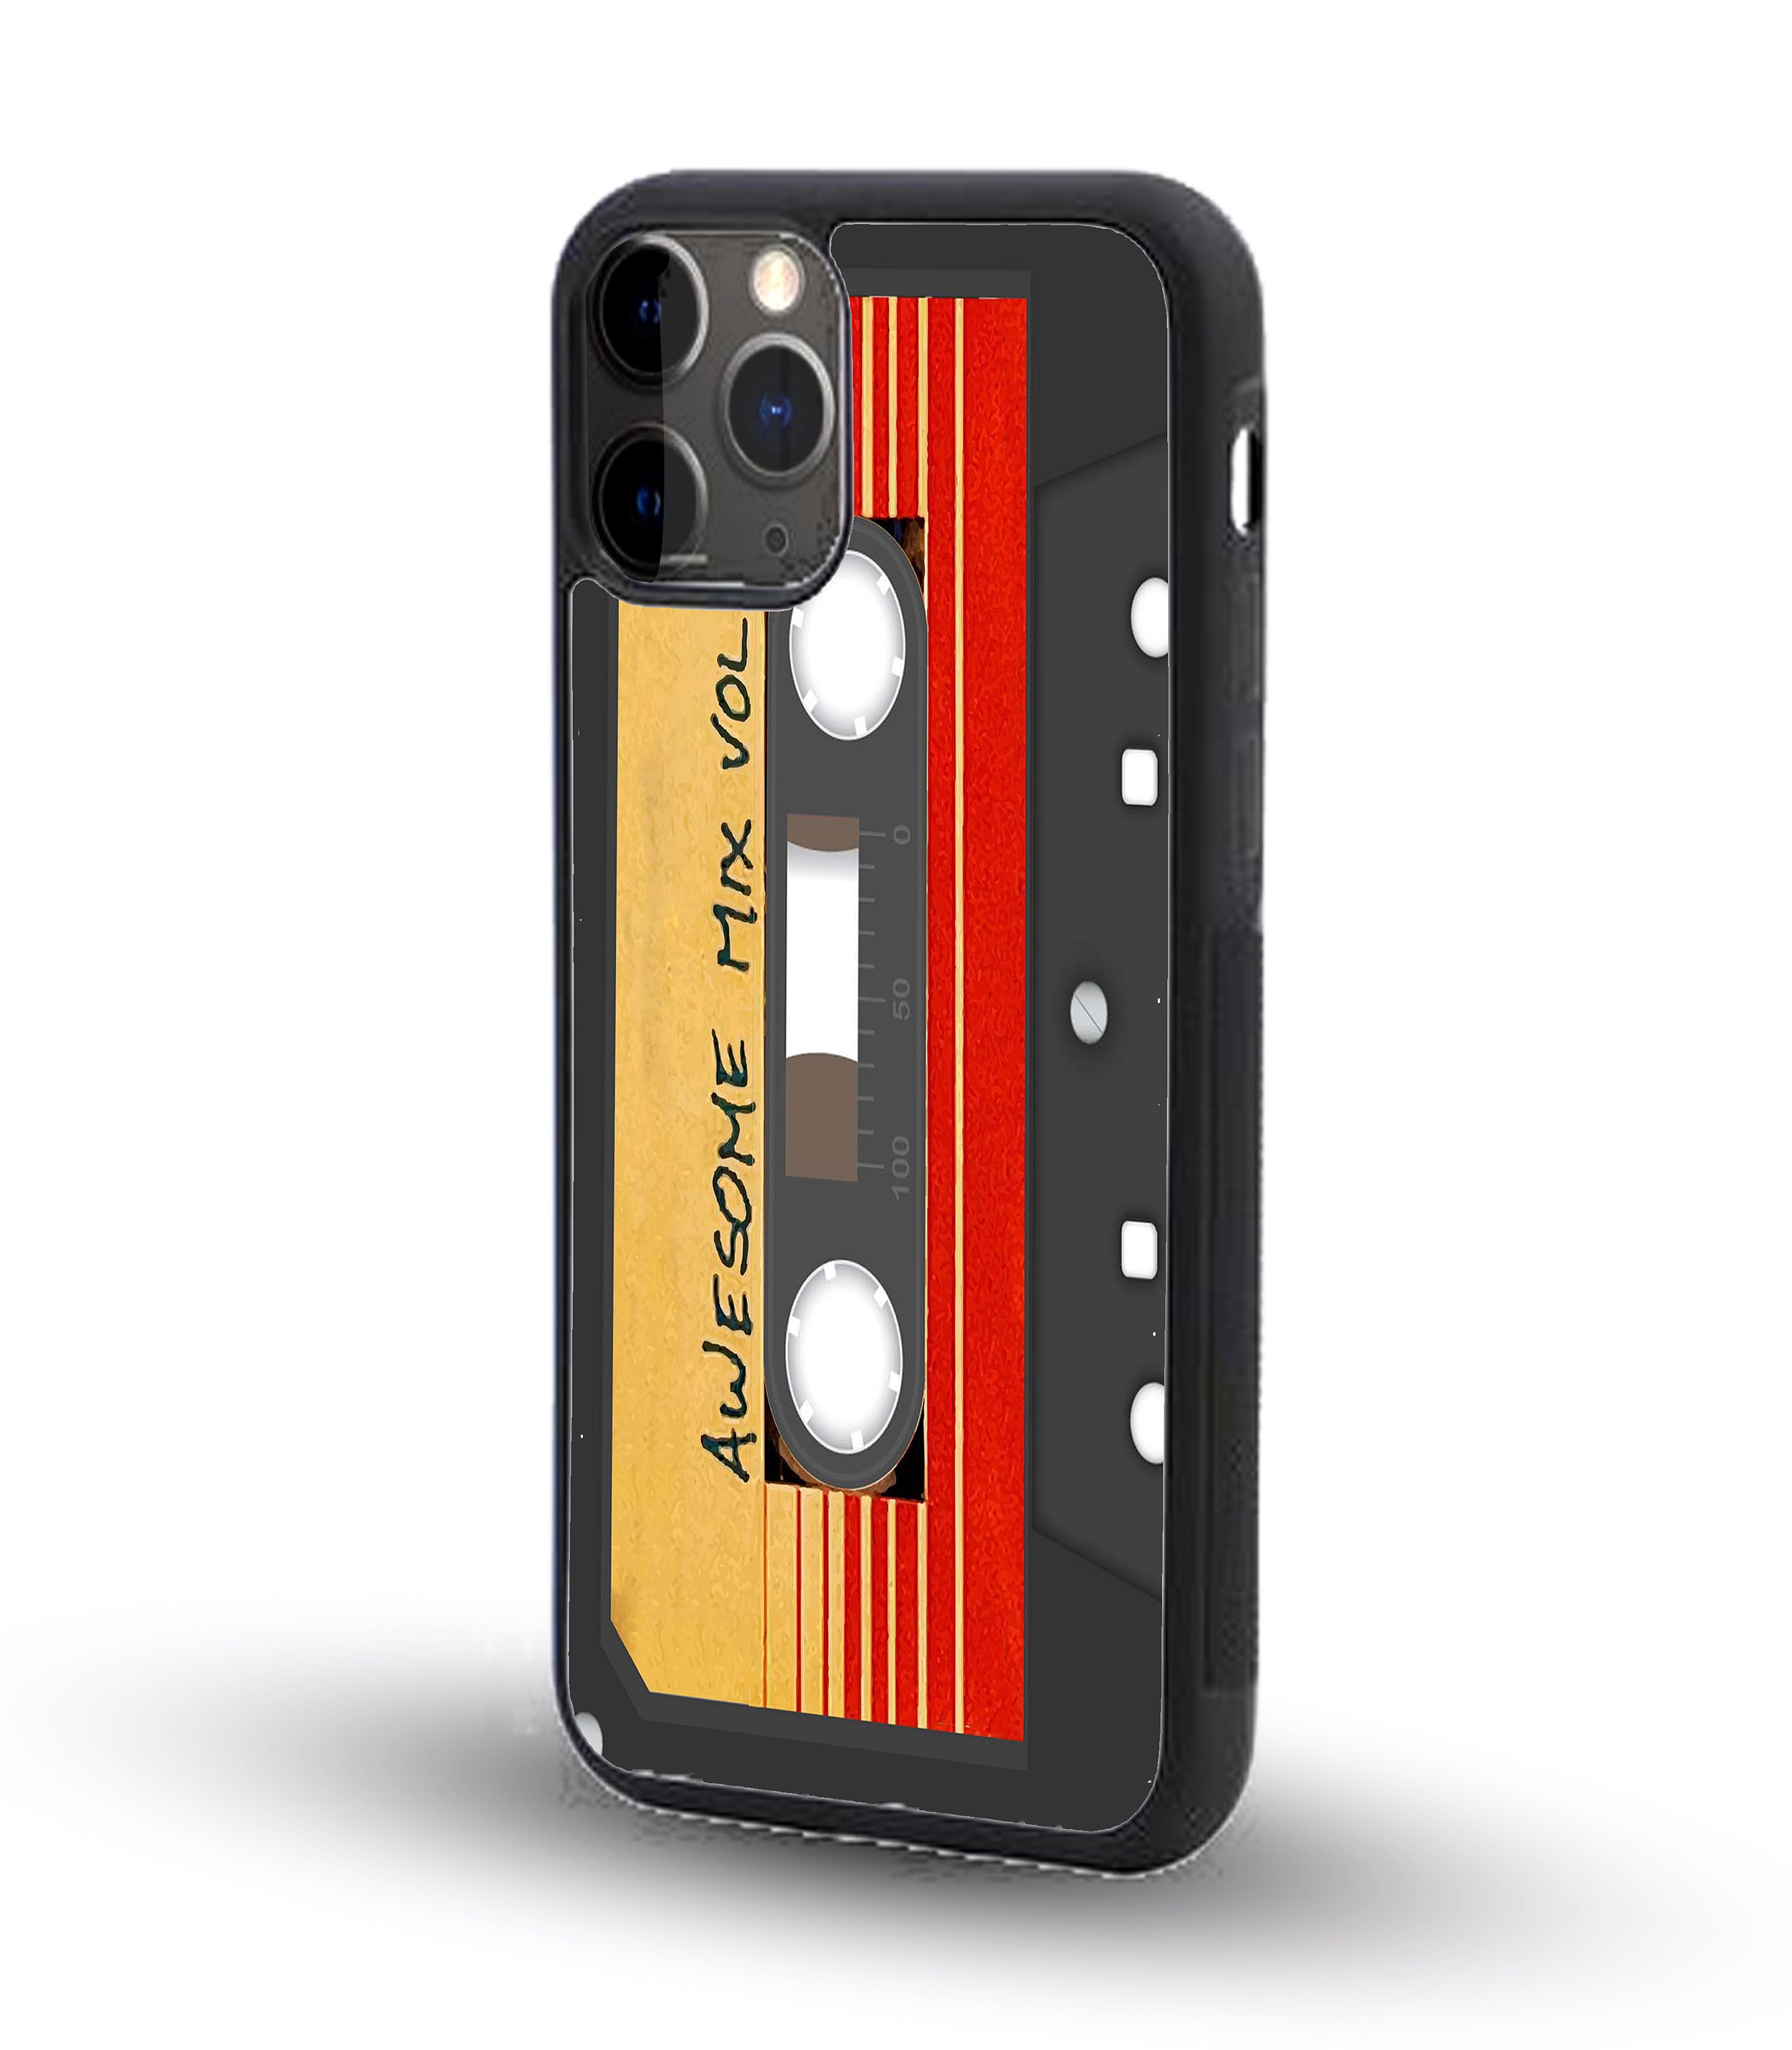 Cassette Tape Phone Case, Vintage Tape iPhone Case, Retro Mix Tape